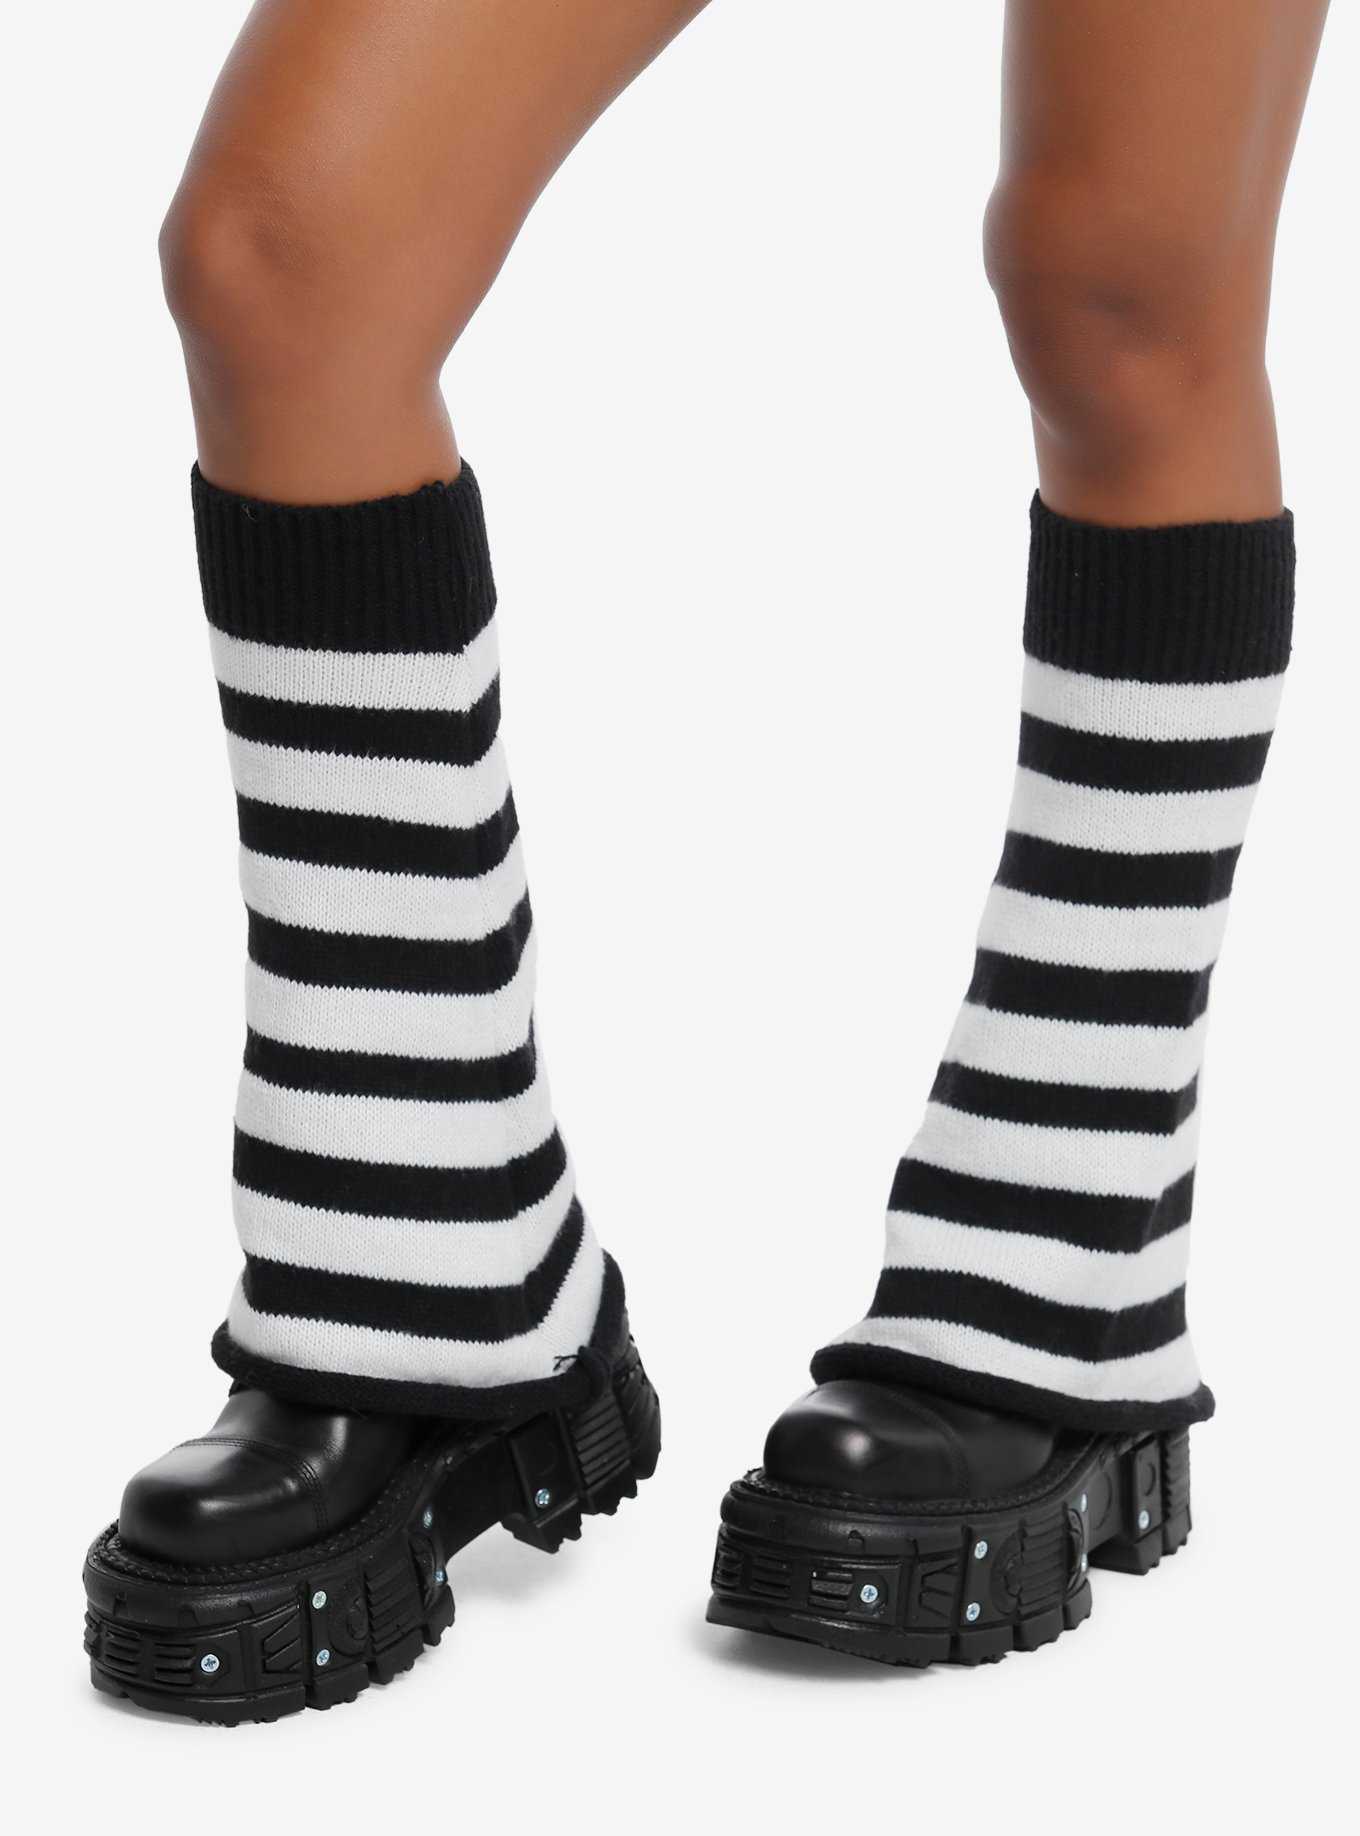 Black & White Stripe Flared Leg Warmers, , hi-res